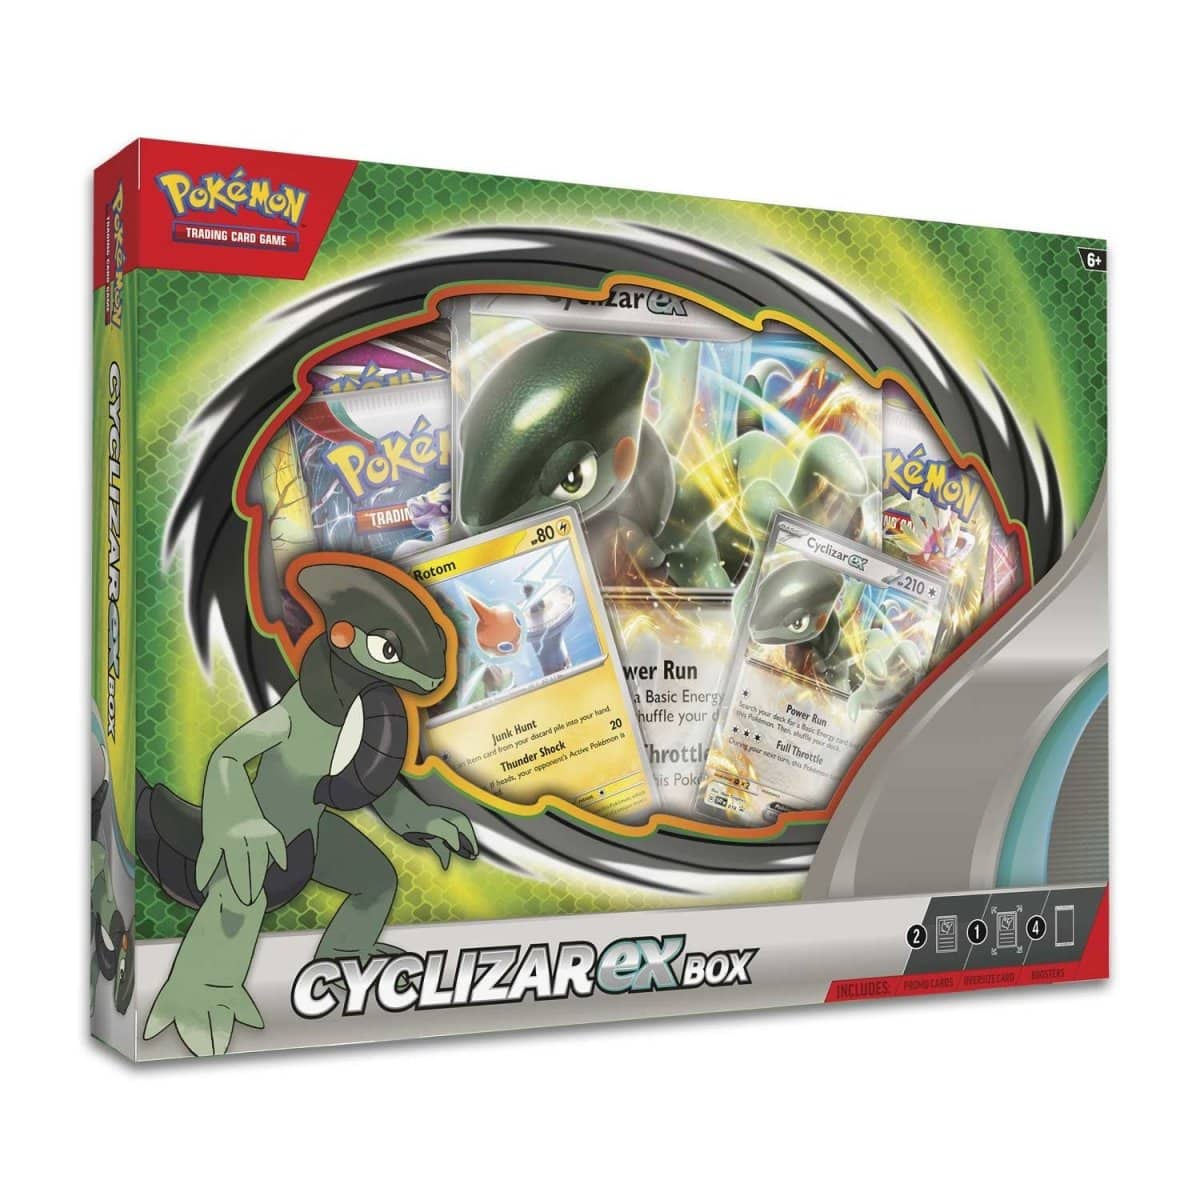 Pokémon TCG Cyclizar Ex box